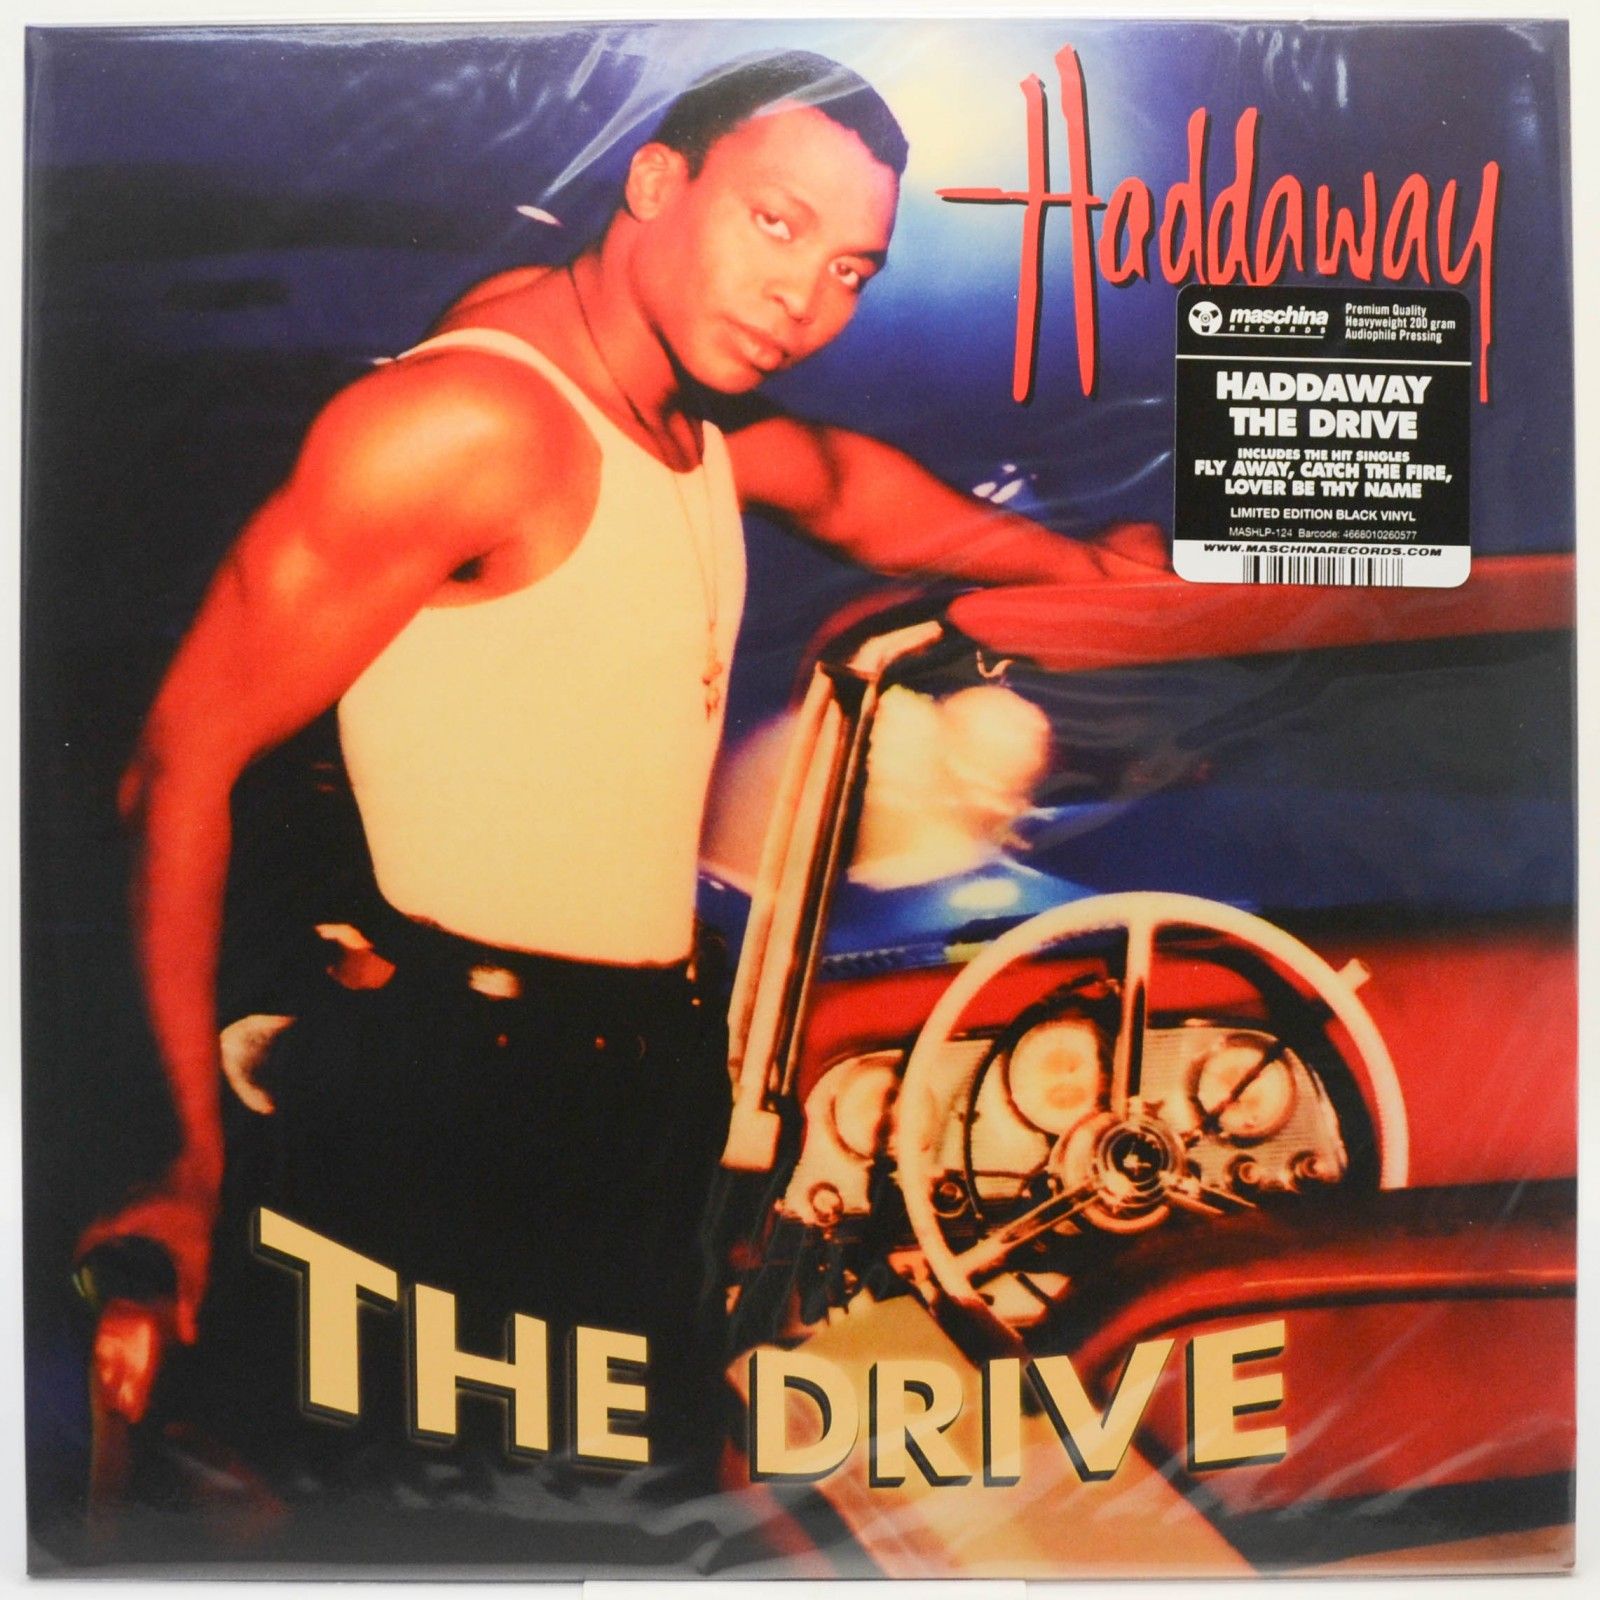 Haddaway — The Drive, 1995